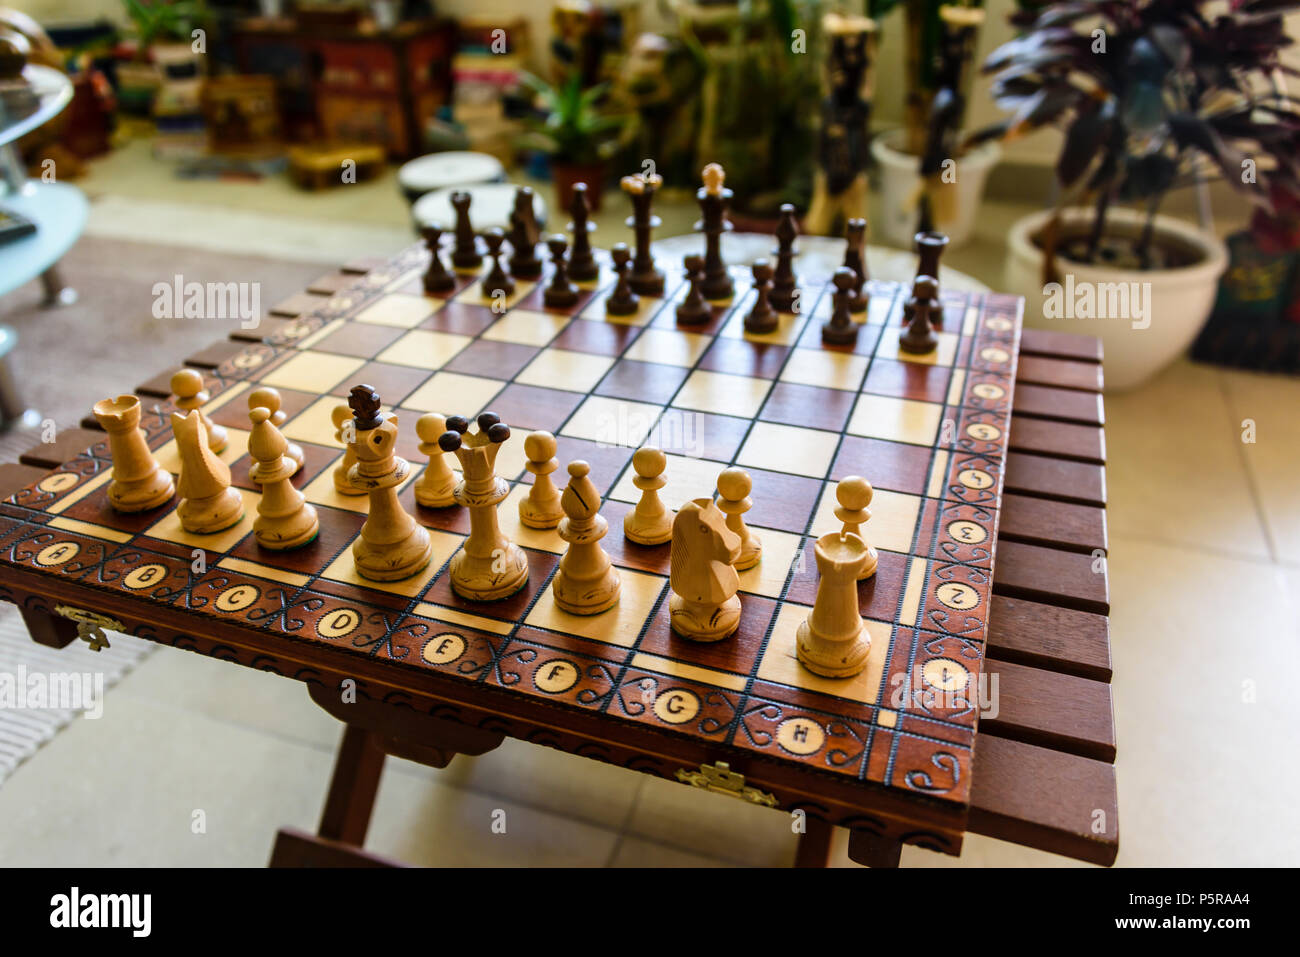 Wooden chessboard inside a trendy modern house. Stock Photo